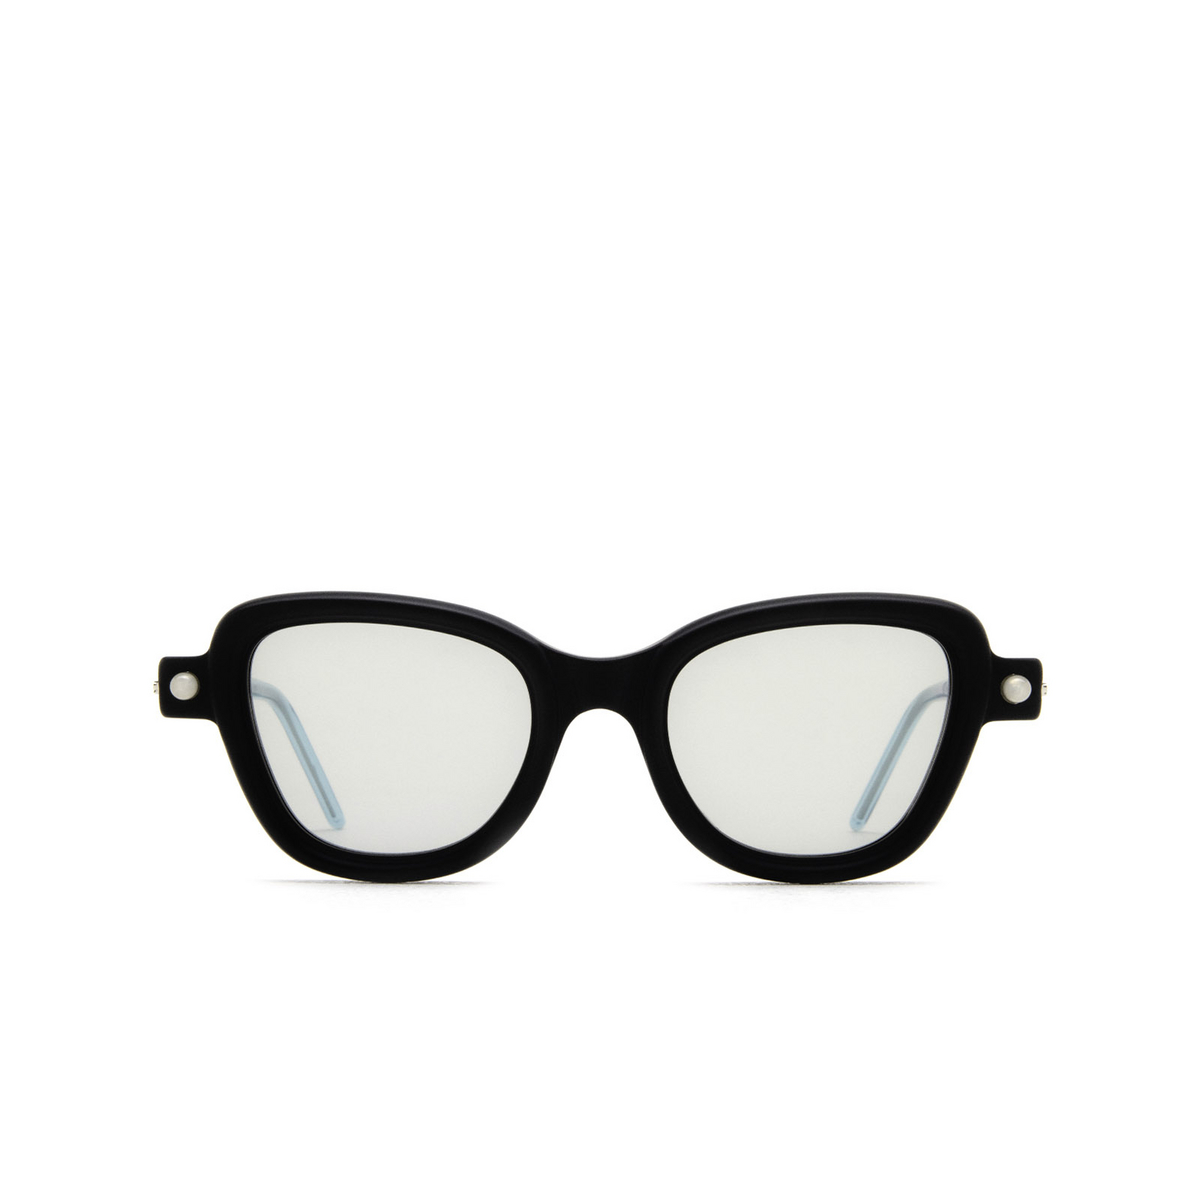 Kuboraum® Cat-eye Sunglasses: P5 color Black Matt & Violet Green Water Bm - front view.